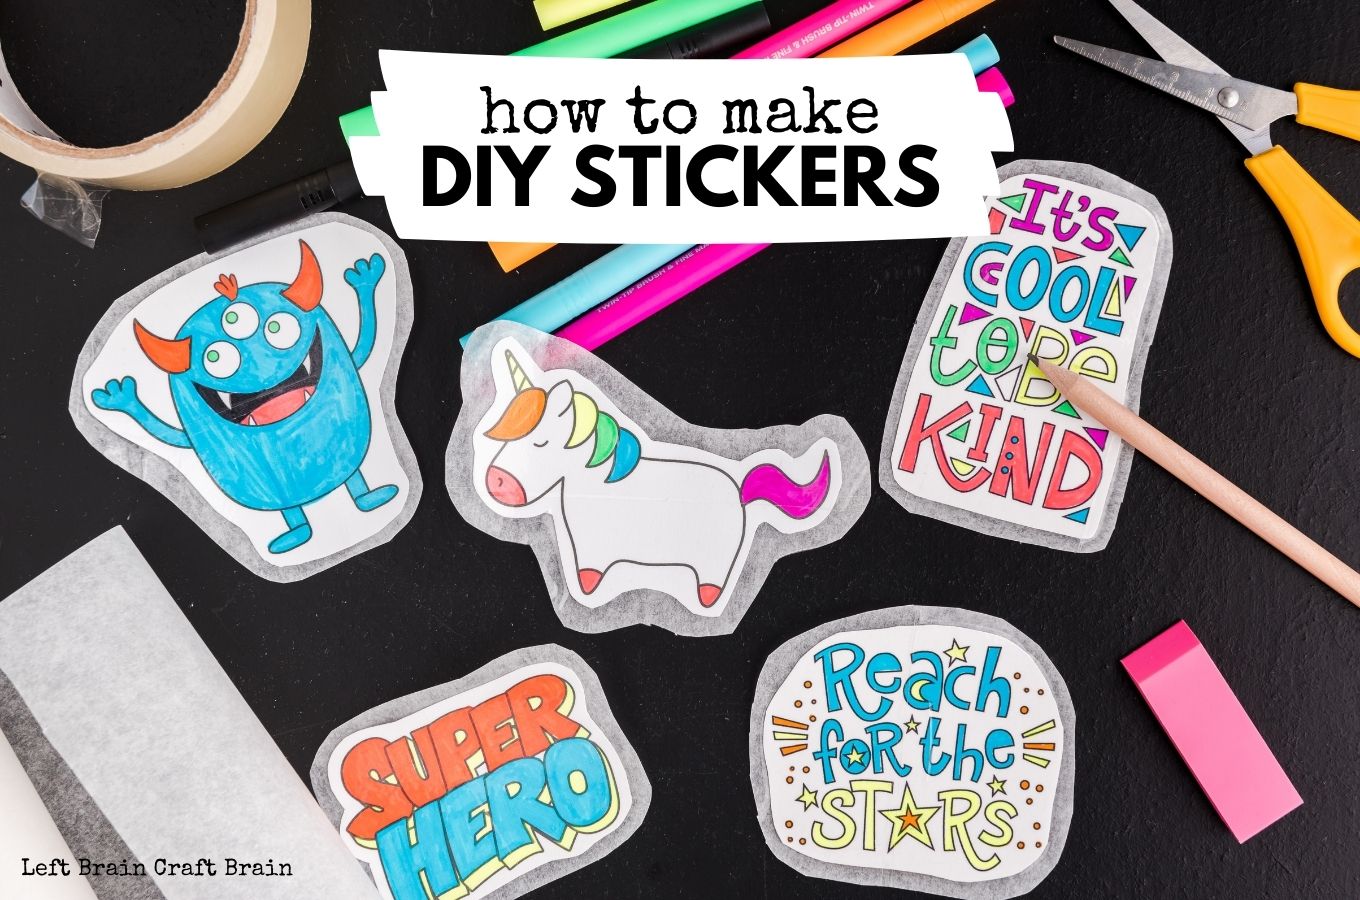 academic edge Anyways How to Make DIY Stickers - Left Brain Craft Brain